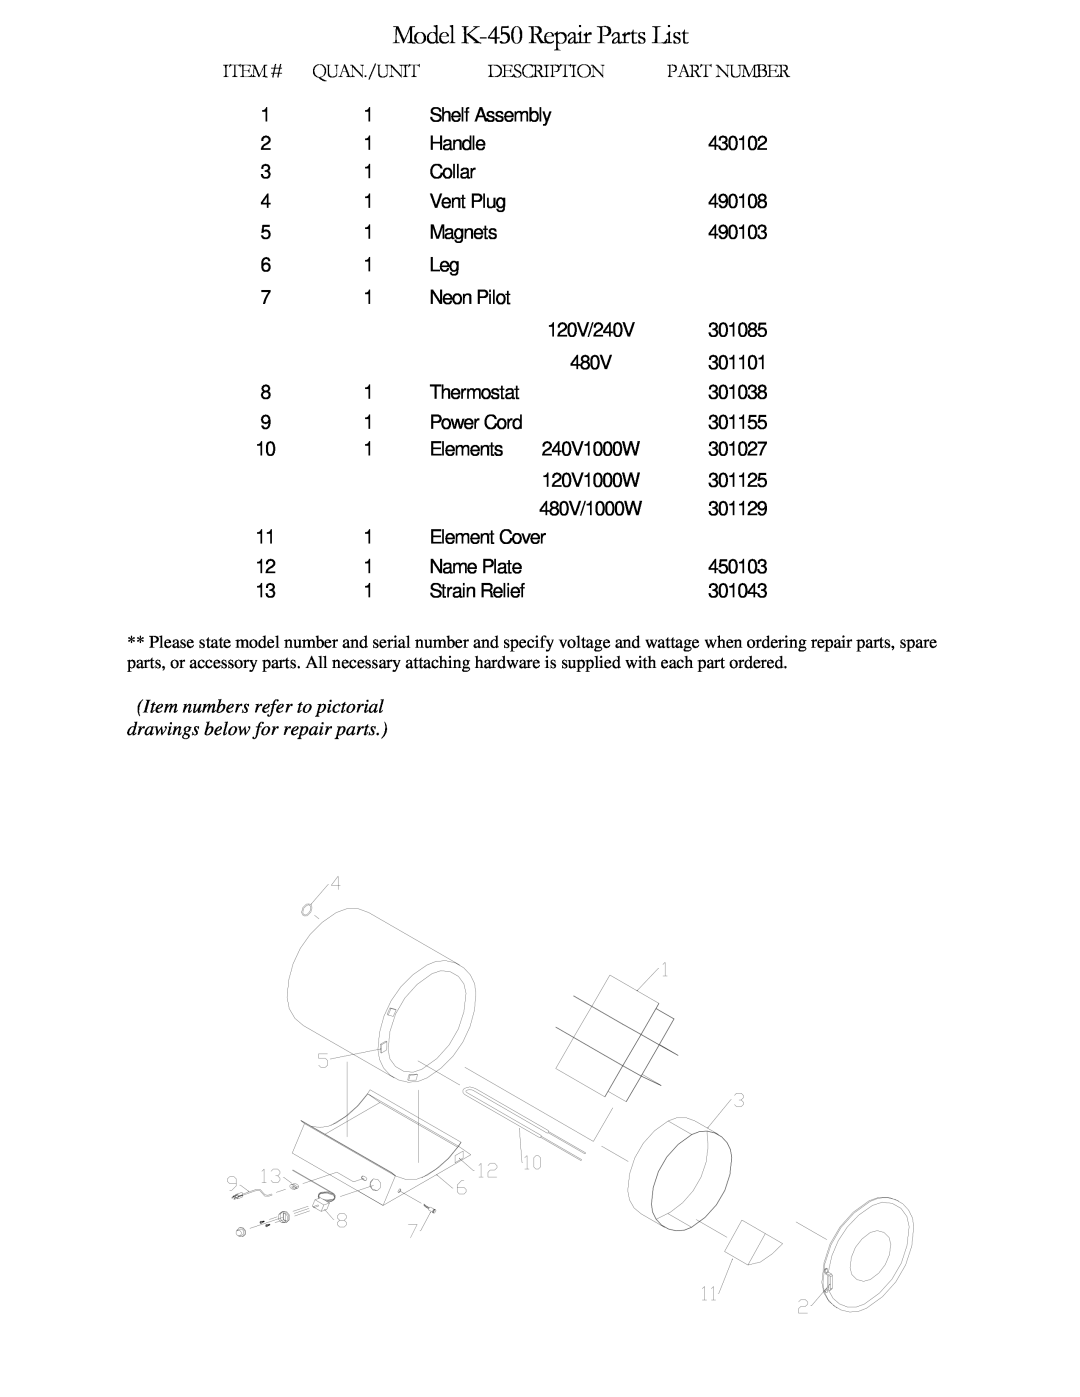 Henkel manual Model K-450Repair Parts List, Item #, Description 